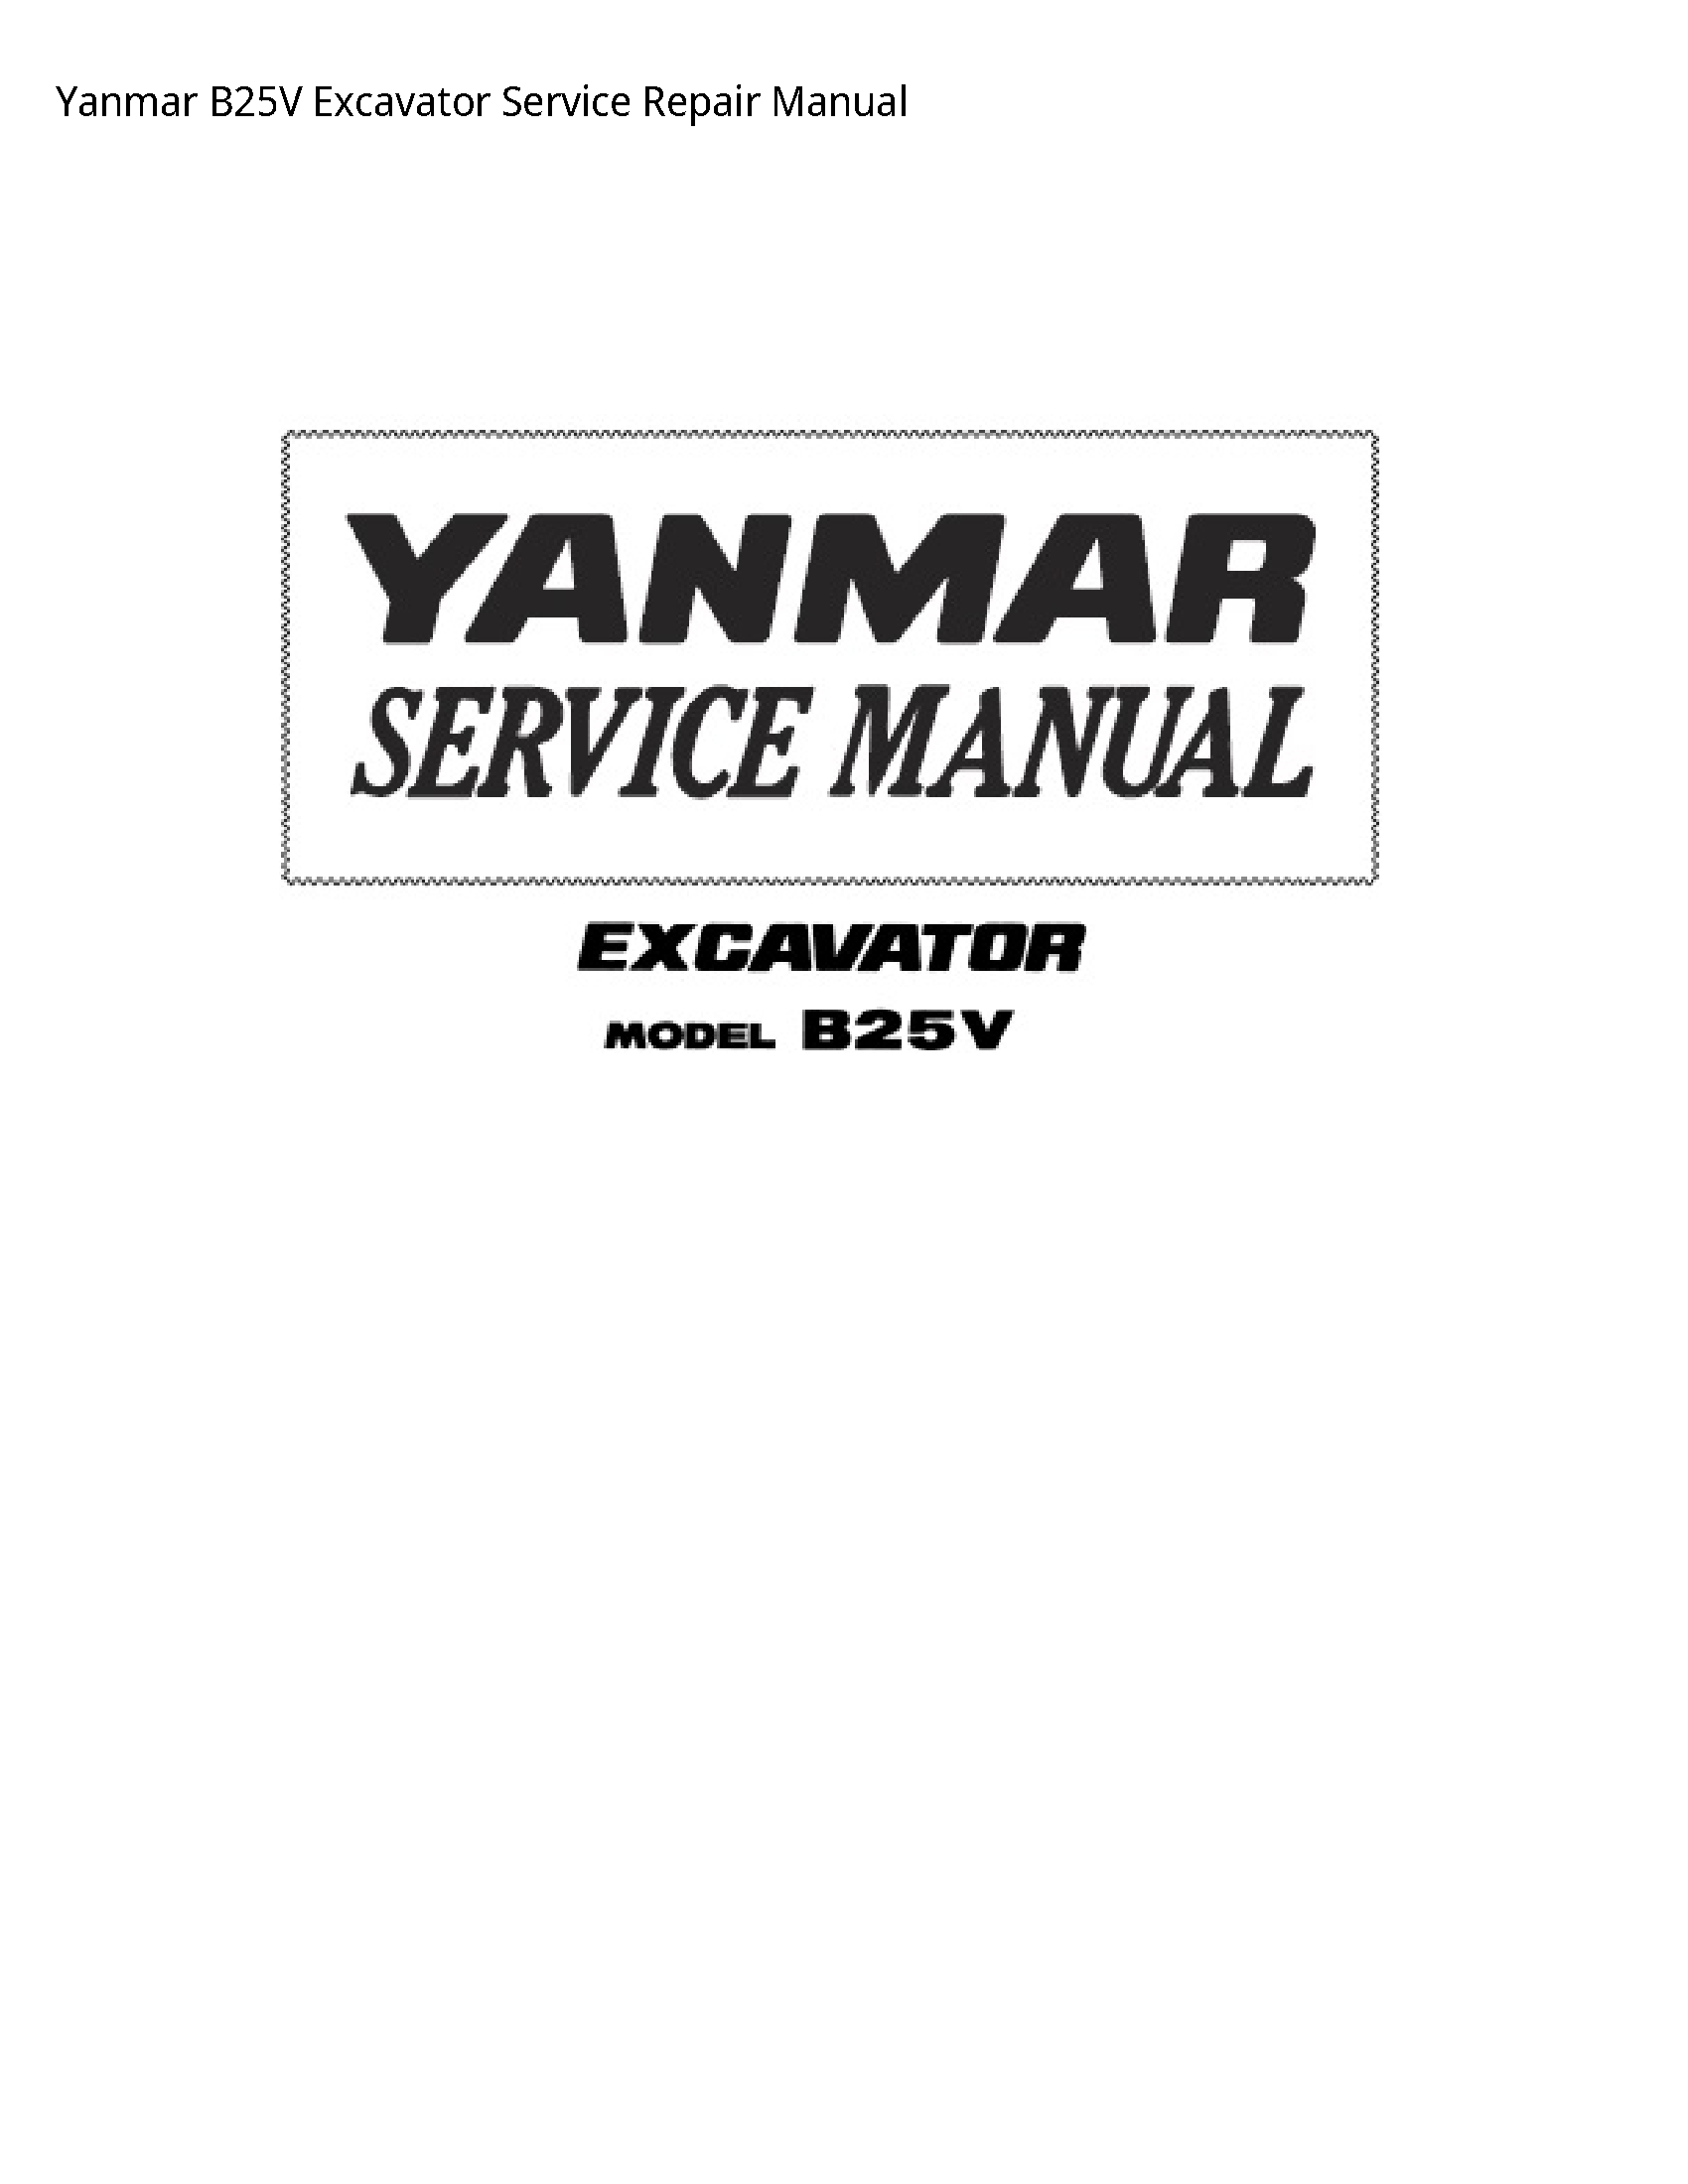 Yanmar B25V Excavator manual